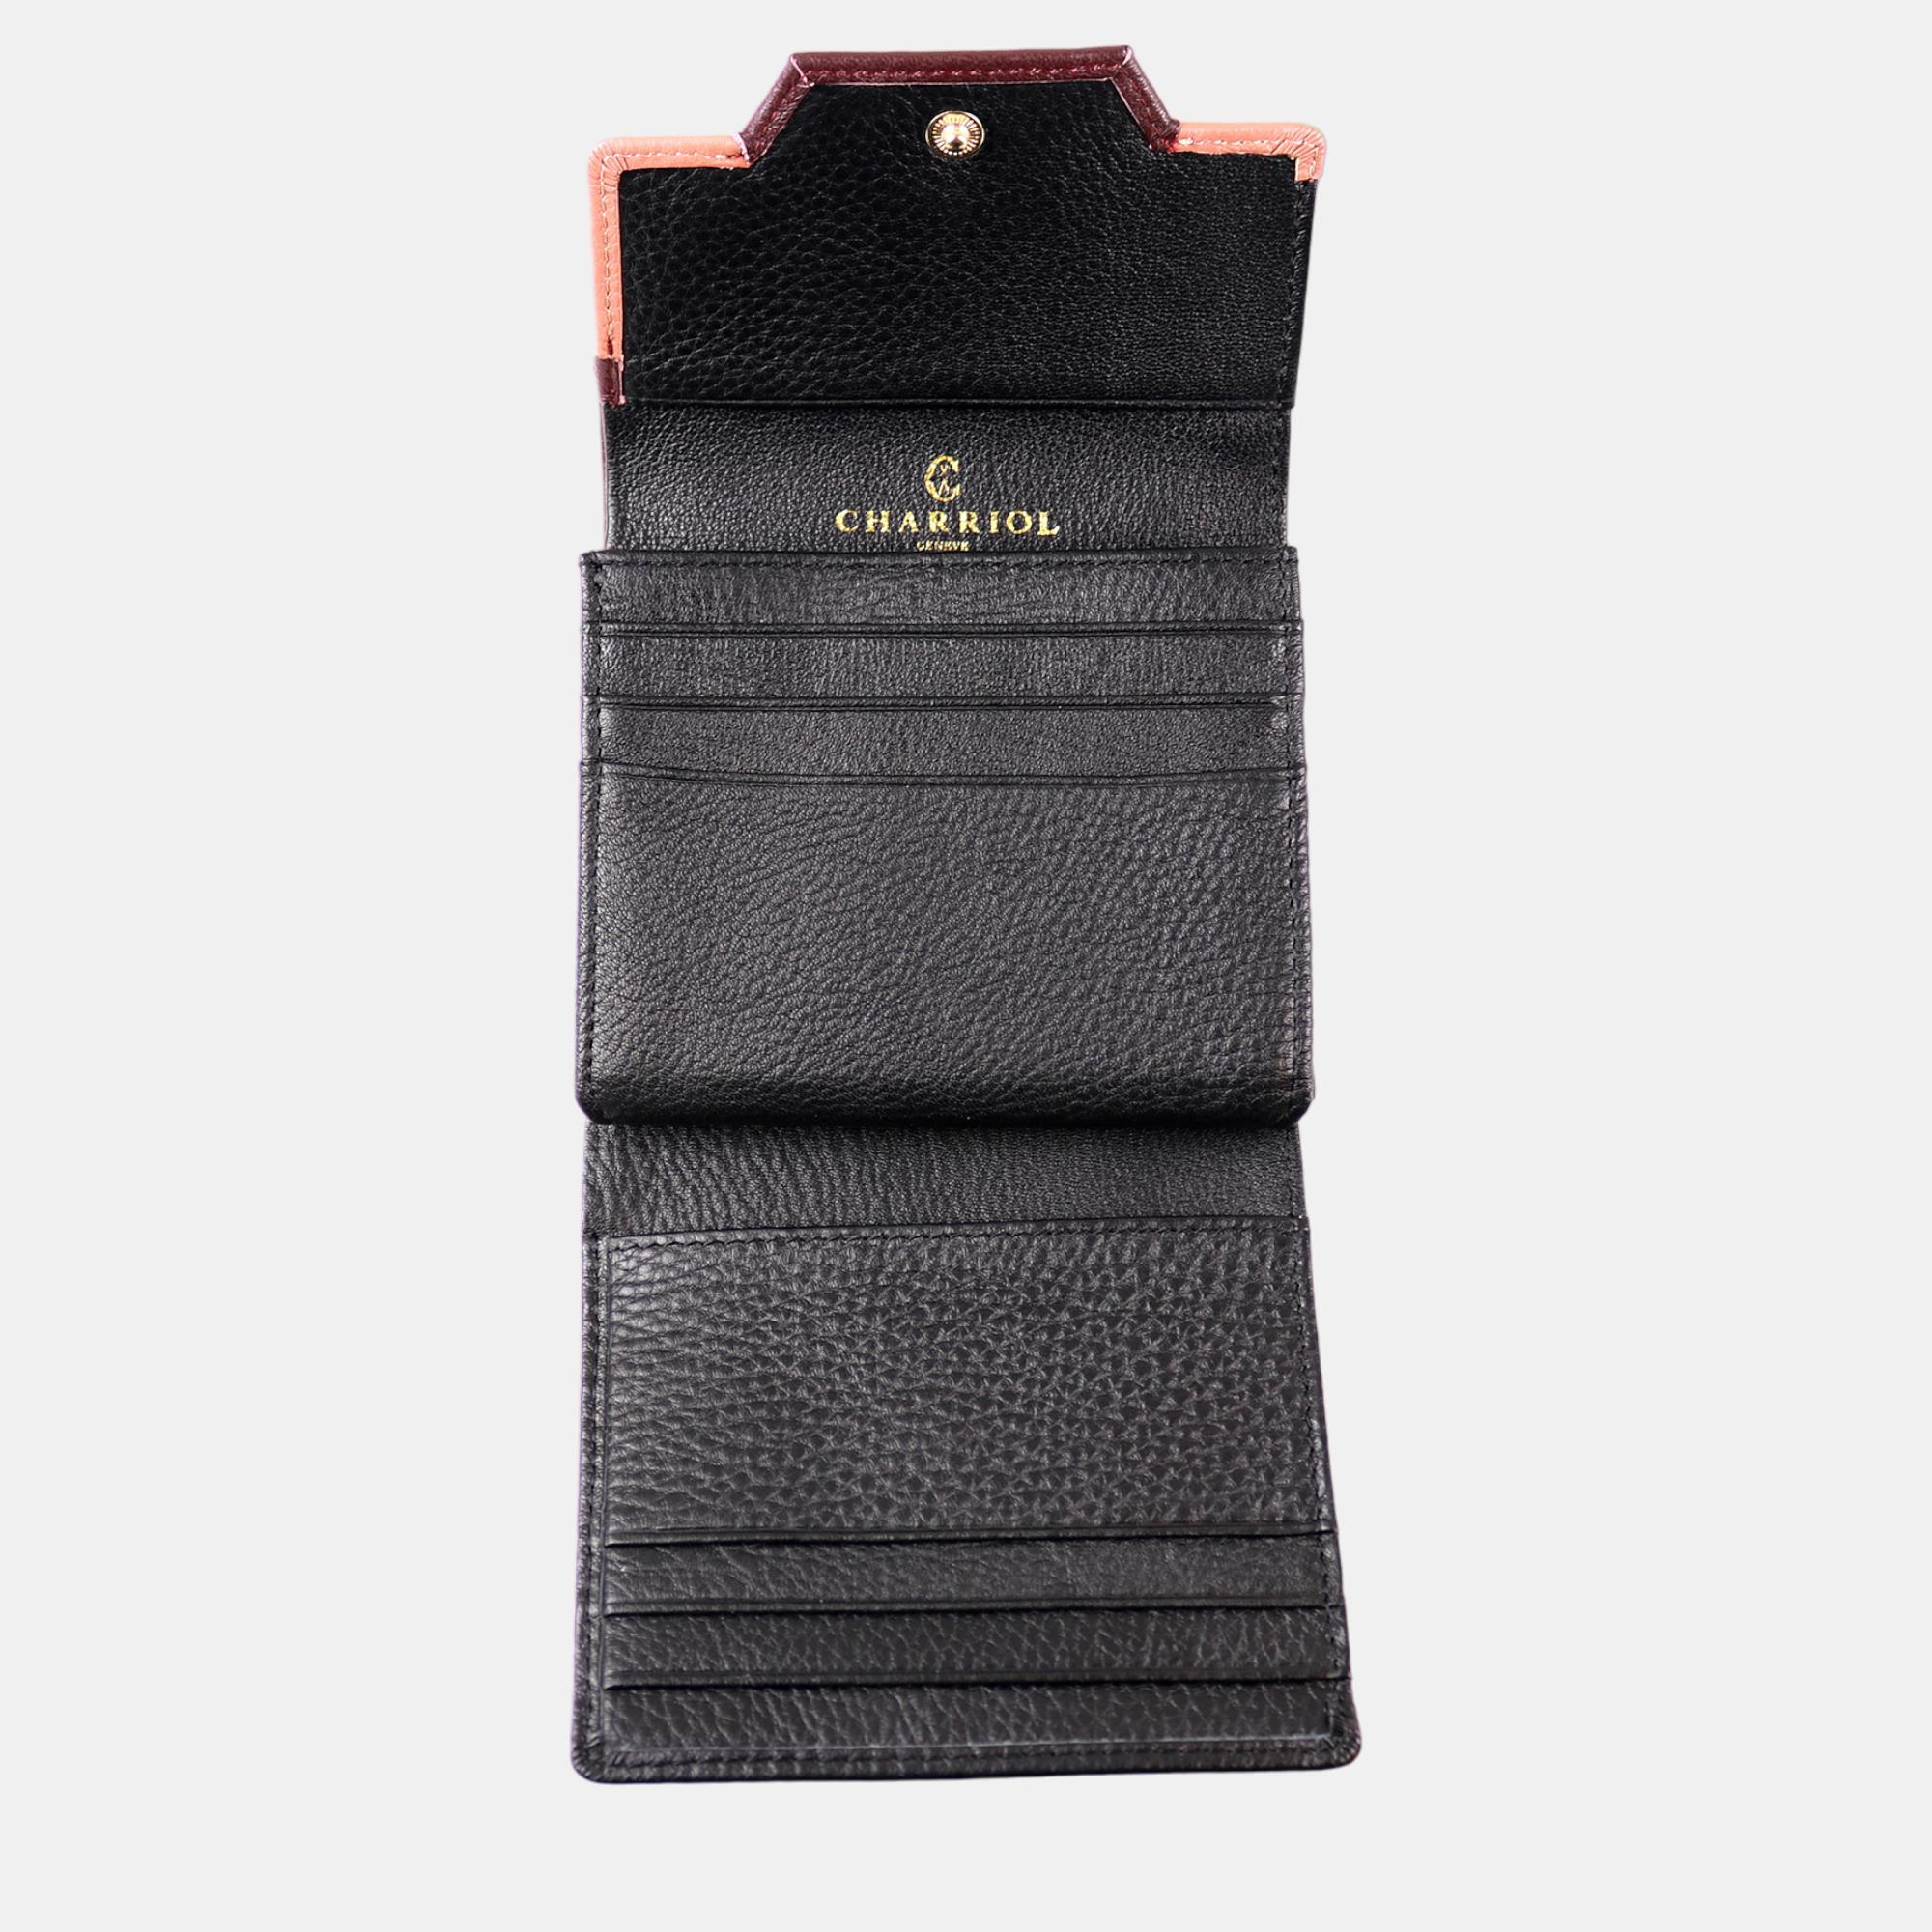 Charriol Black/Dark Pink Leather Forever Wallet